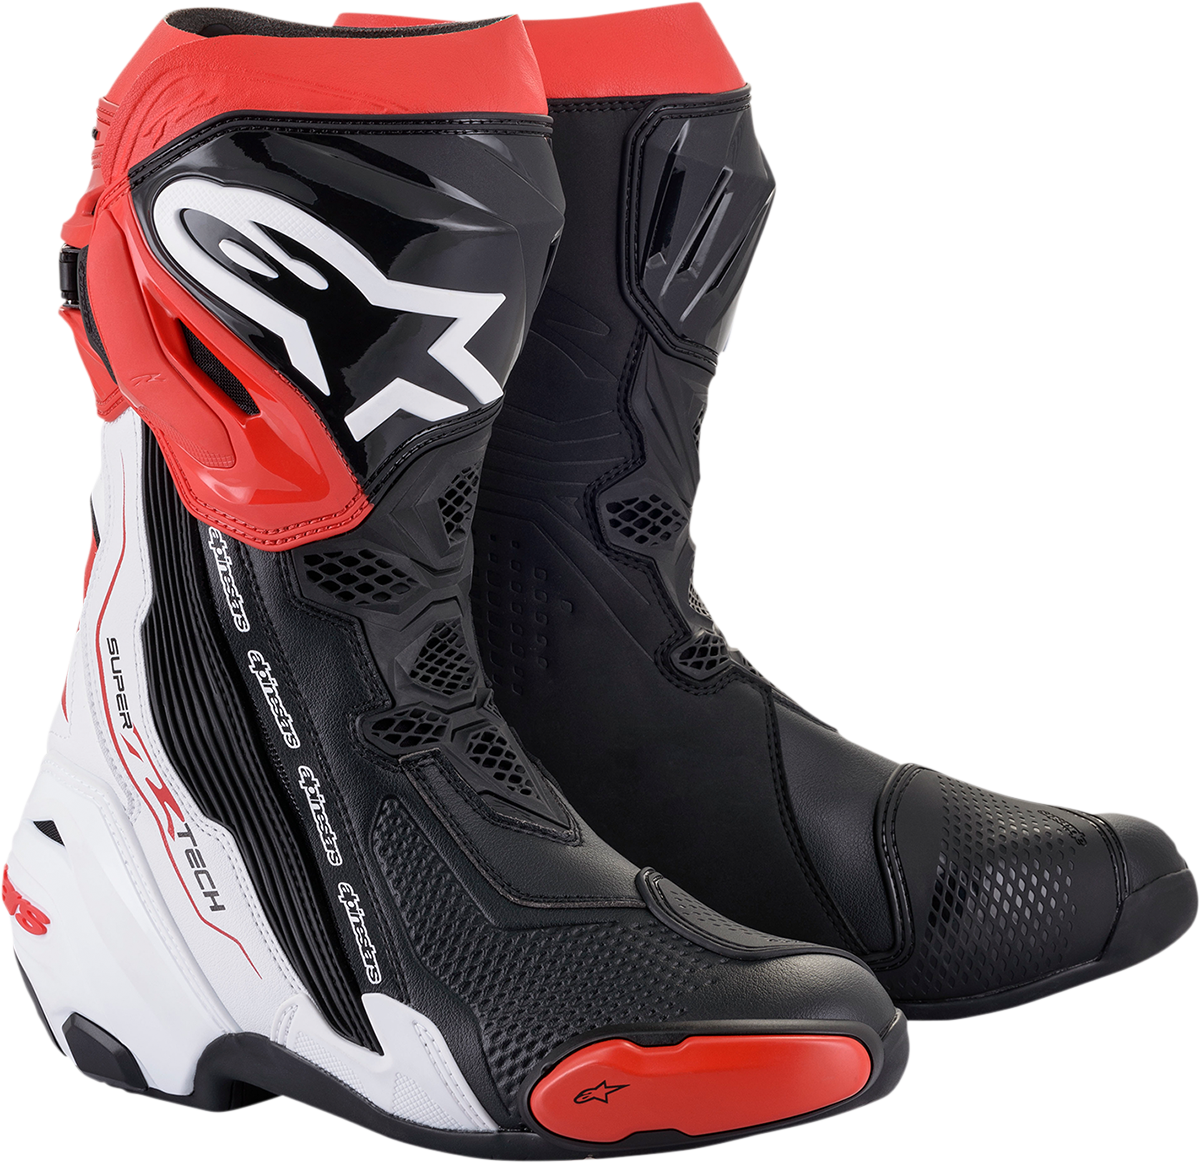 ALPINESTARS Supertech R Boots - Black/White/Red - US 7.5 / EU 41 2220021-123-41